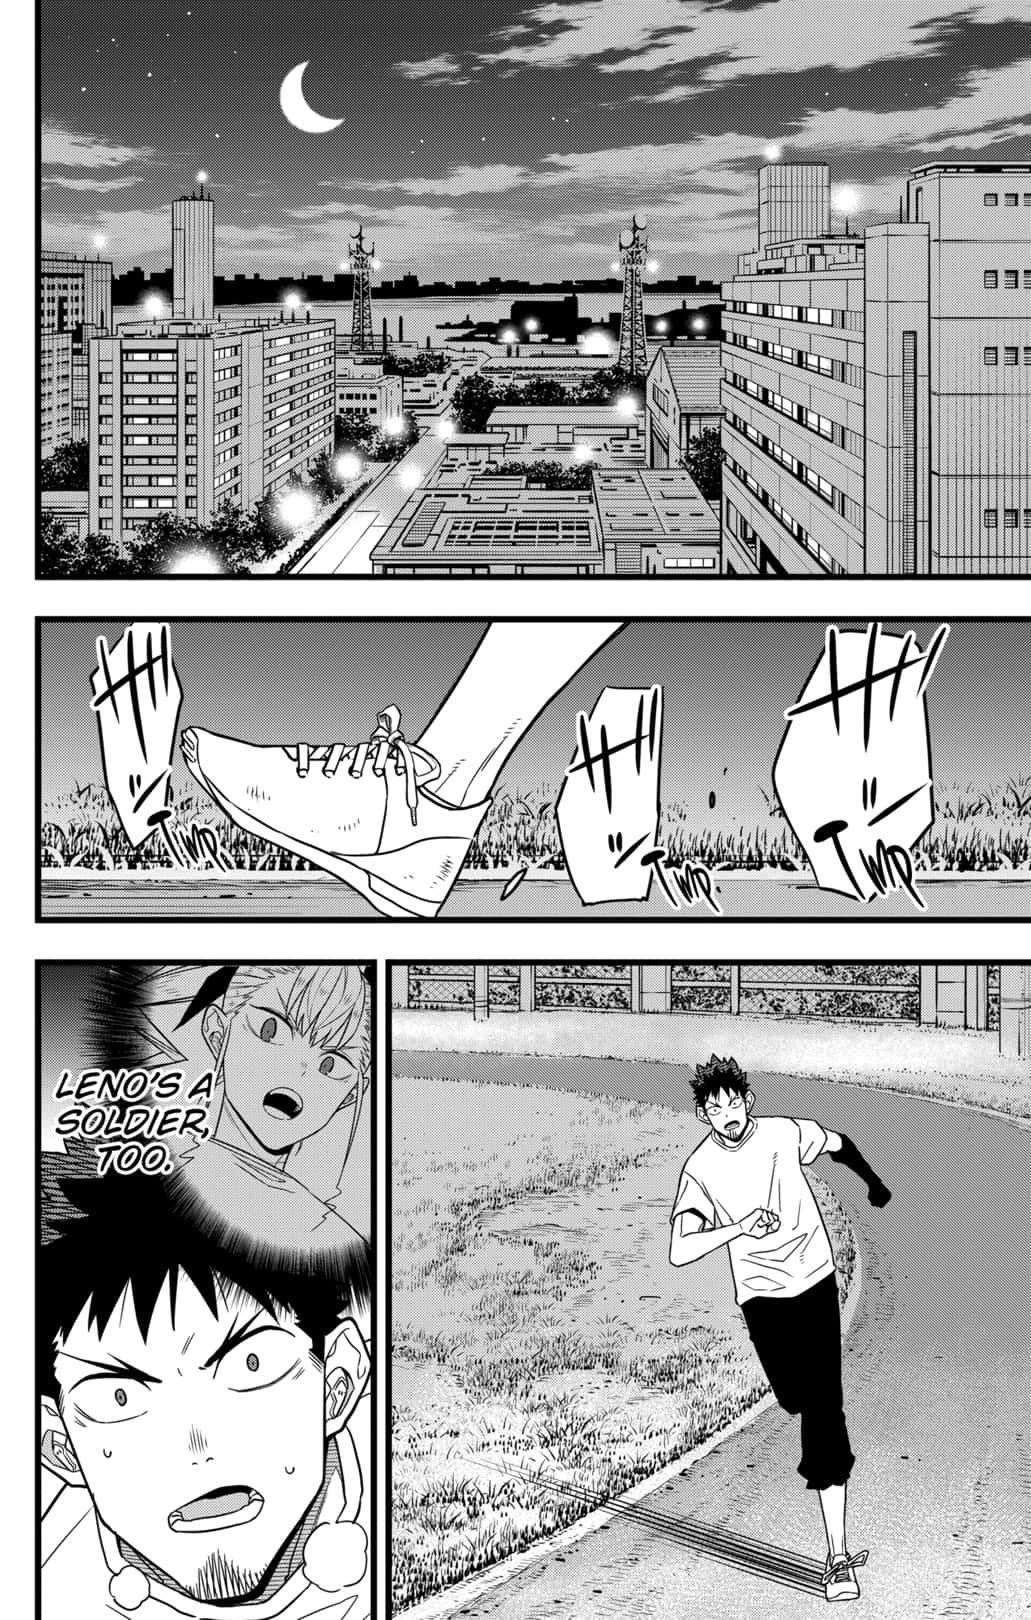 Kaiju No. 8 Chapter 65 page 6 - Mangakakalot